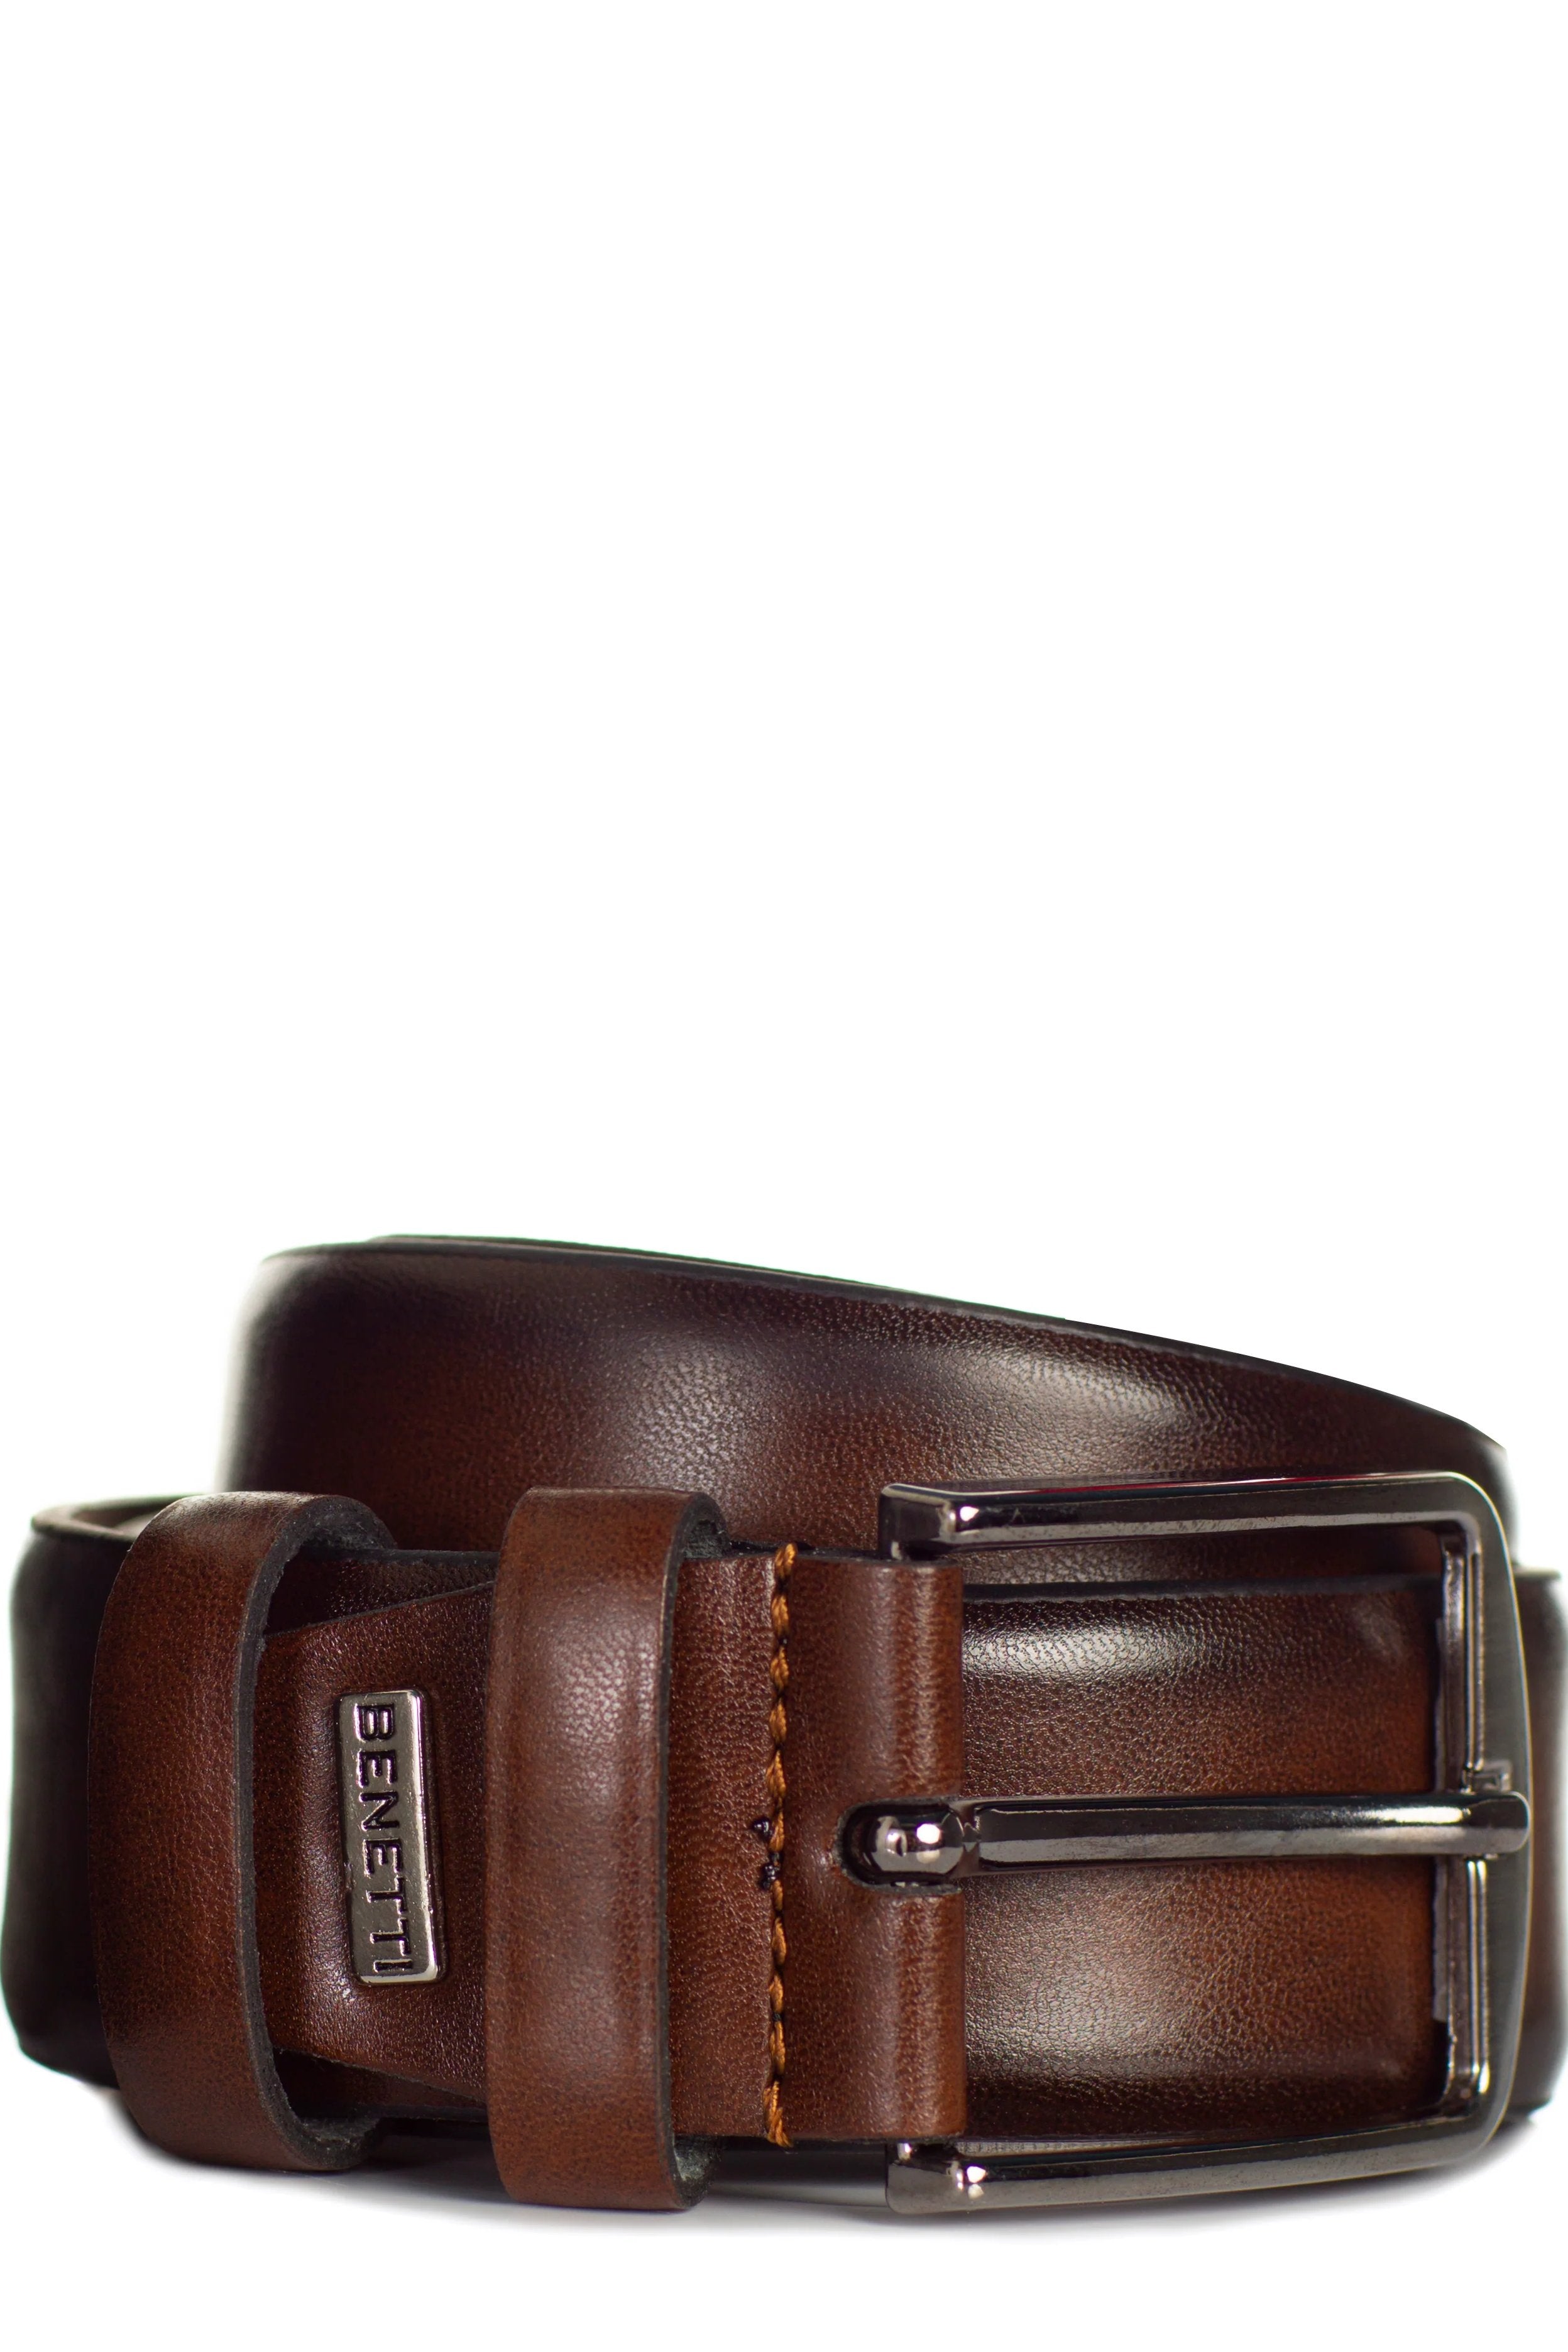 Men's Brown Leather Belt by Benetti - Spirit Clothing